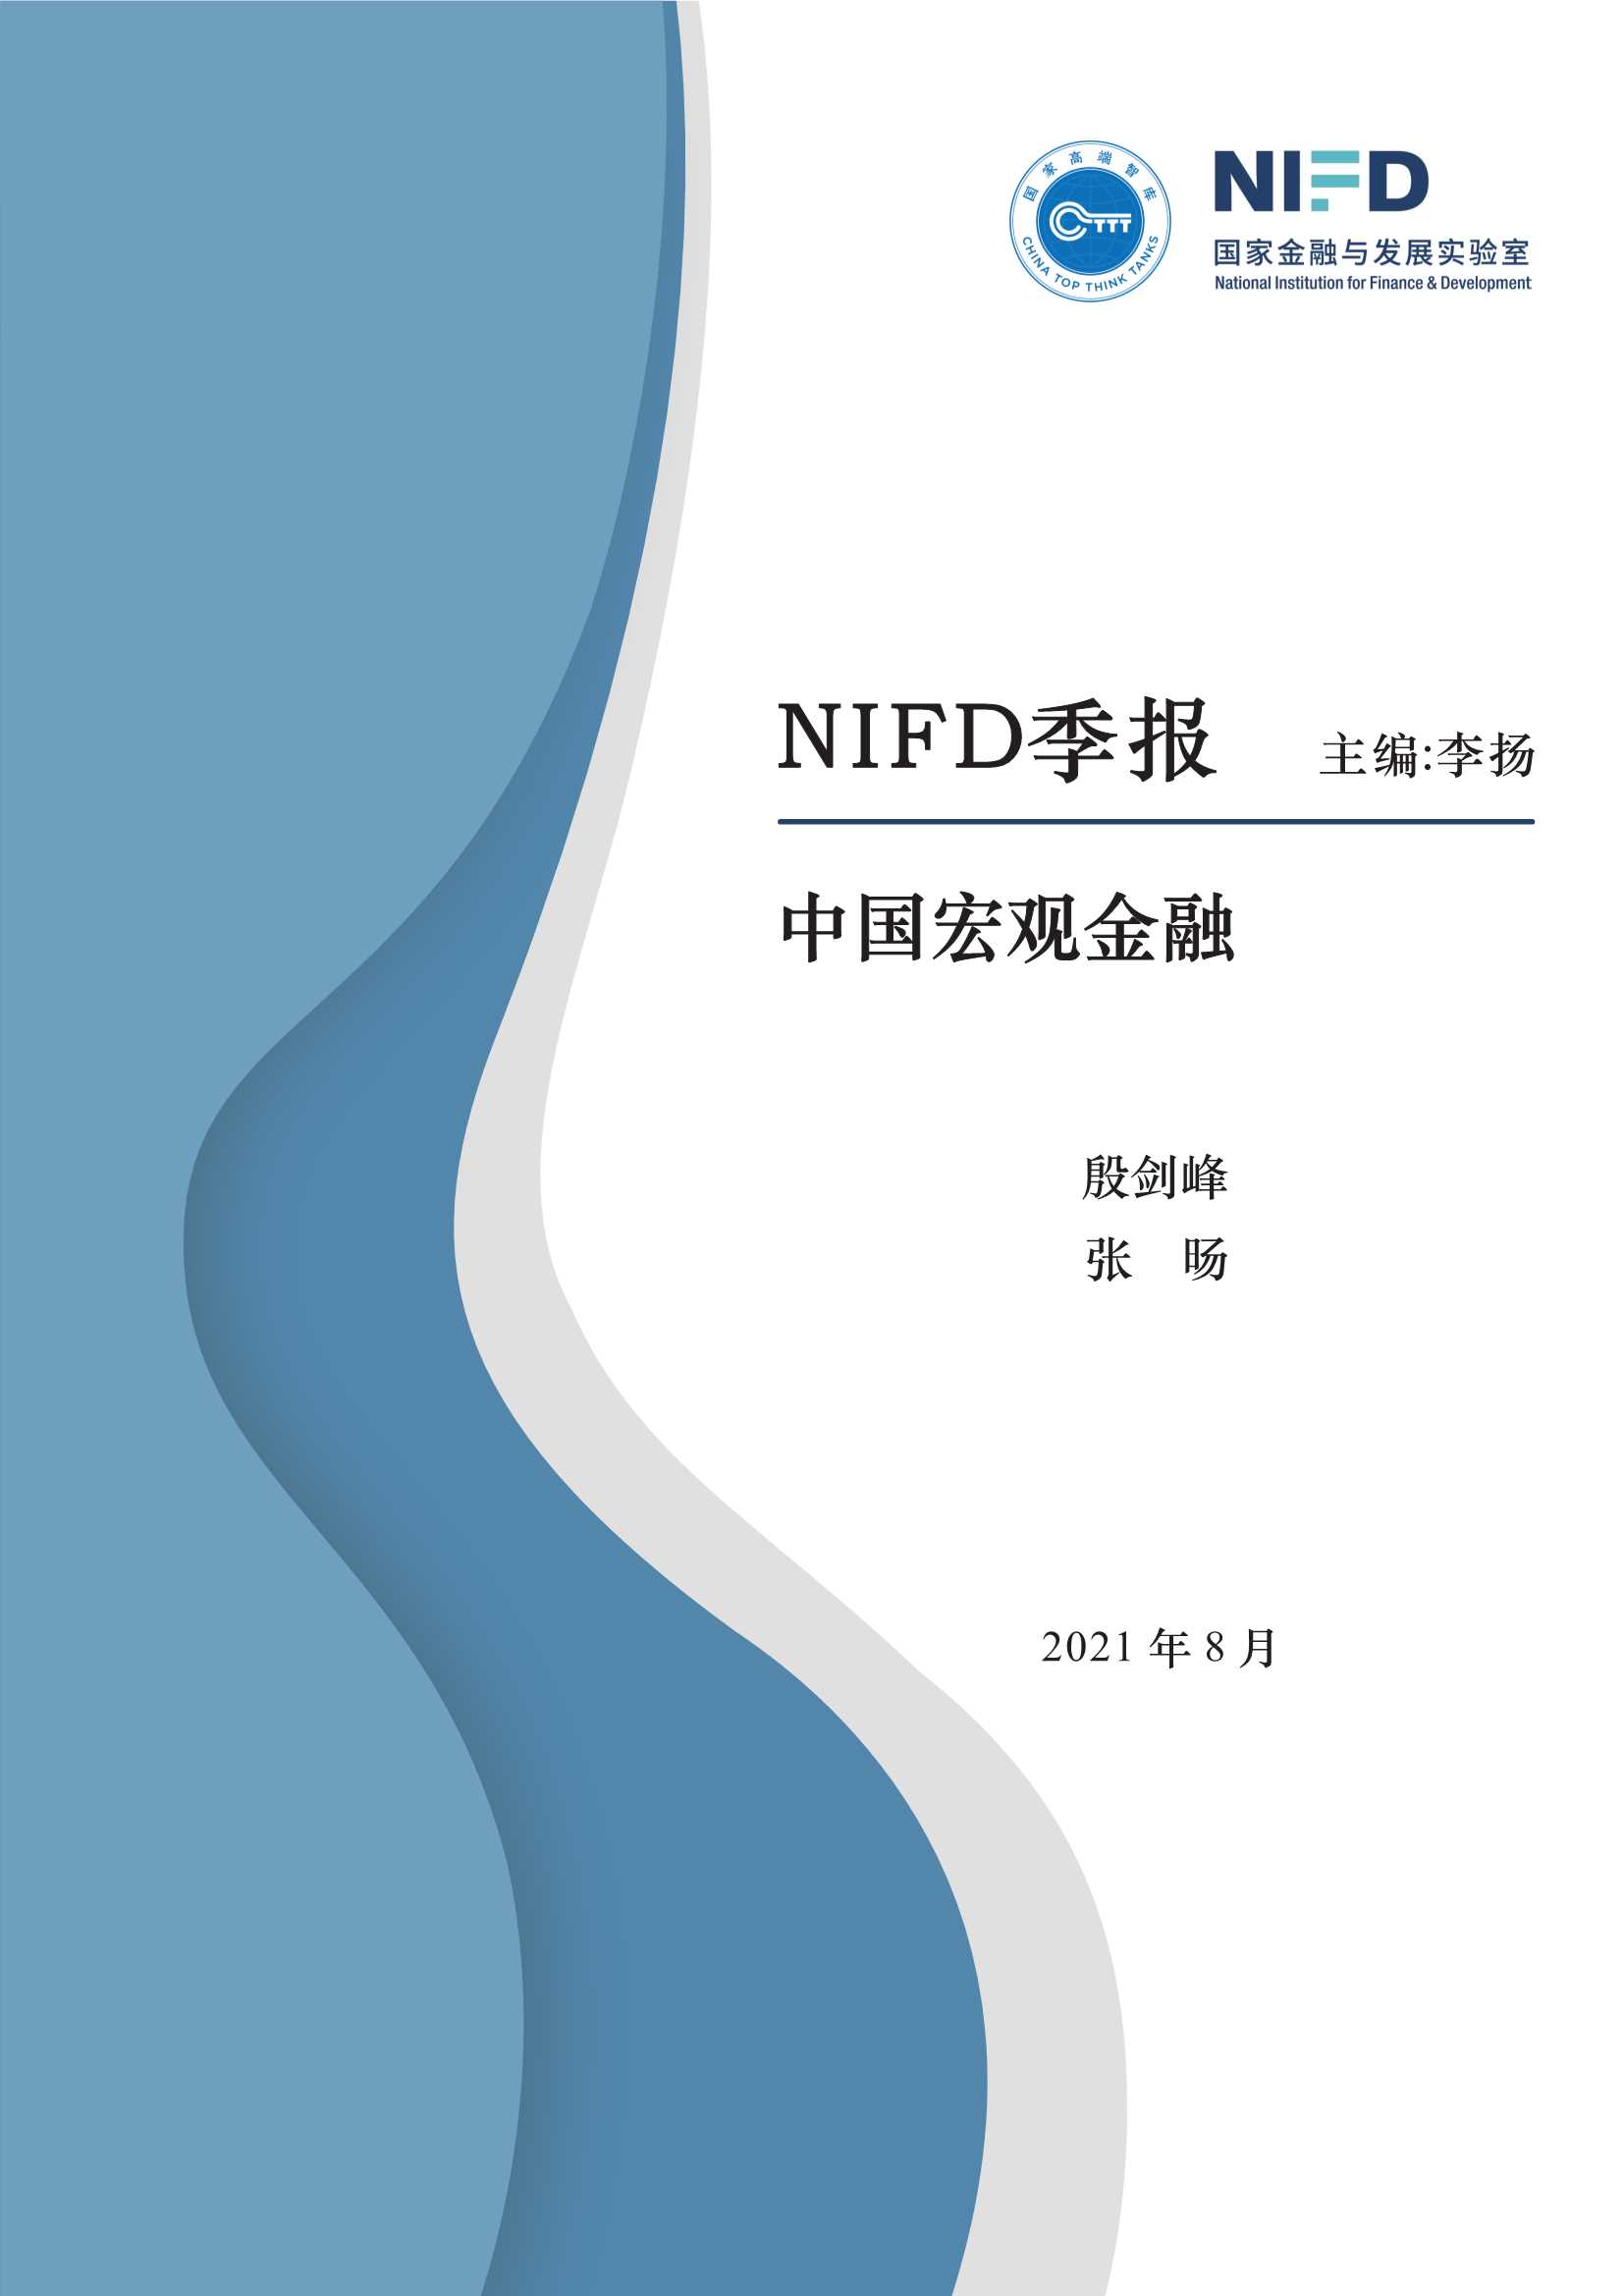 NIFD-2021Q2中国宏观金融-2021.08-17页